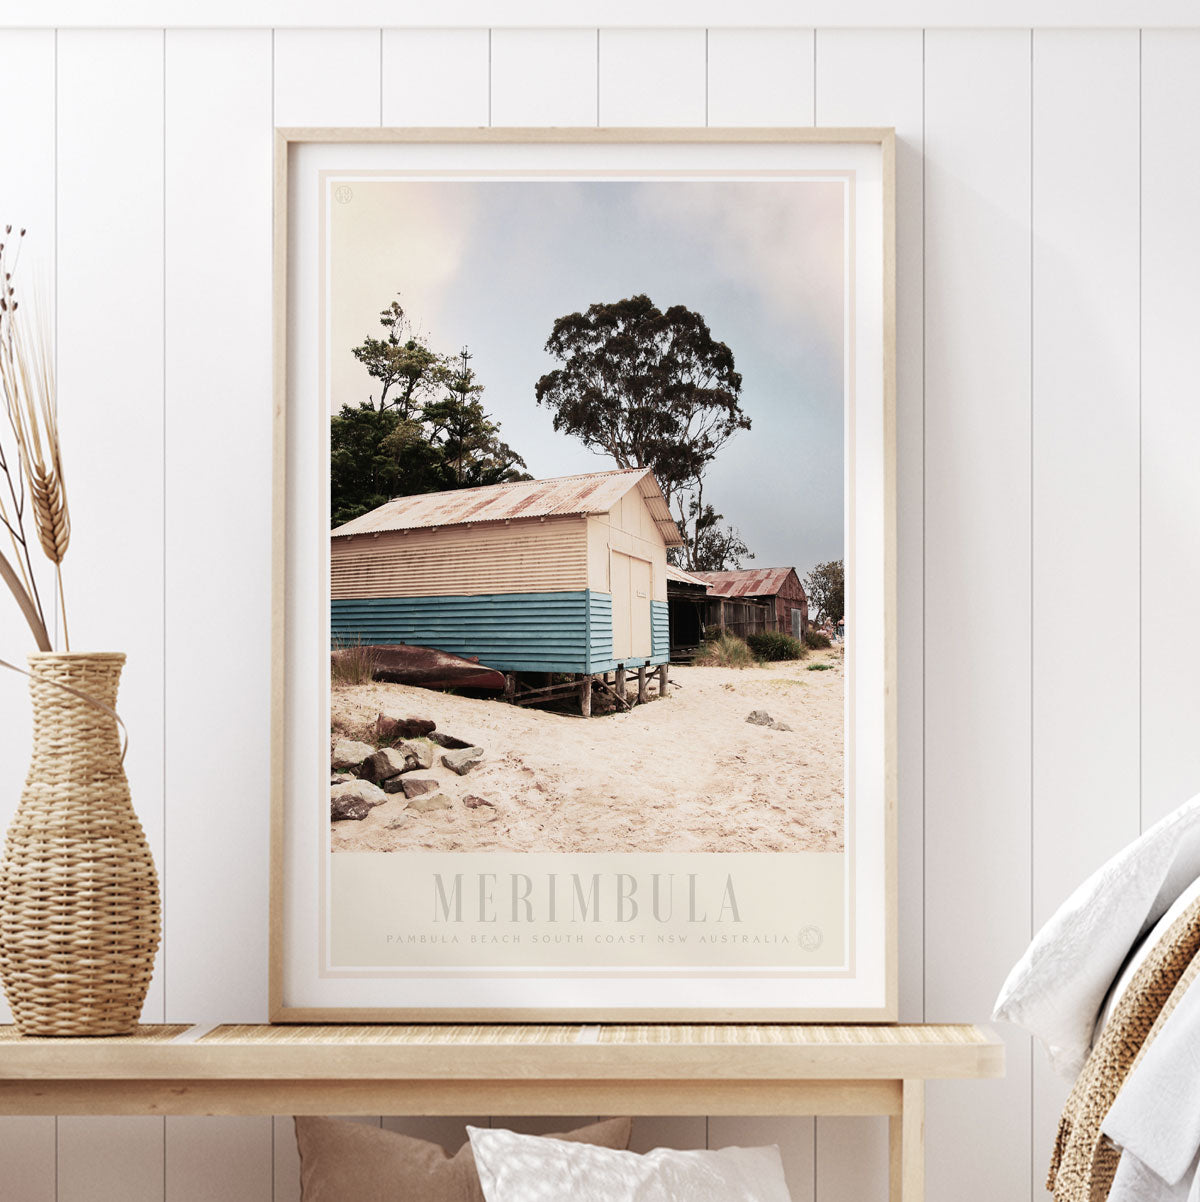 Merimbula NSW vintage retro travel print from Places We Luv